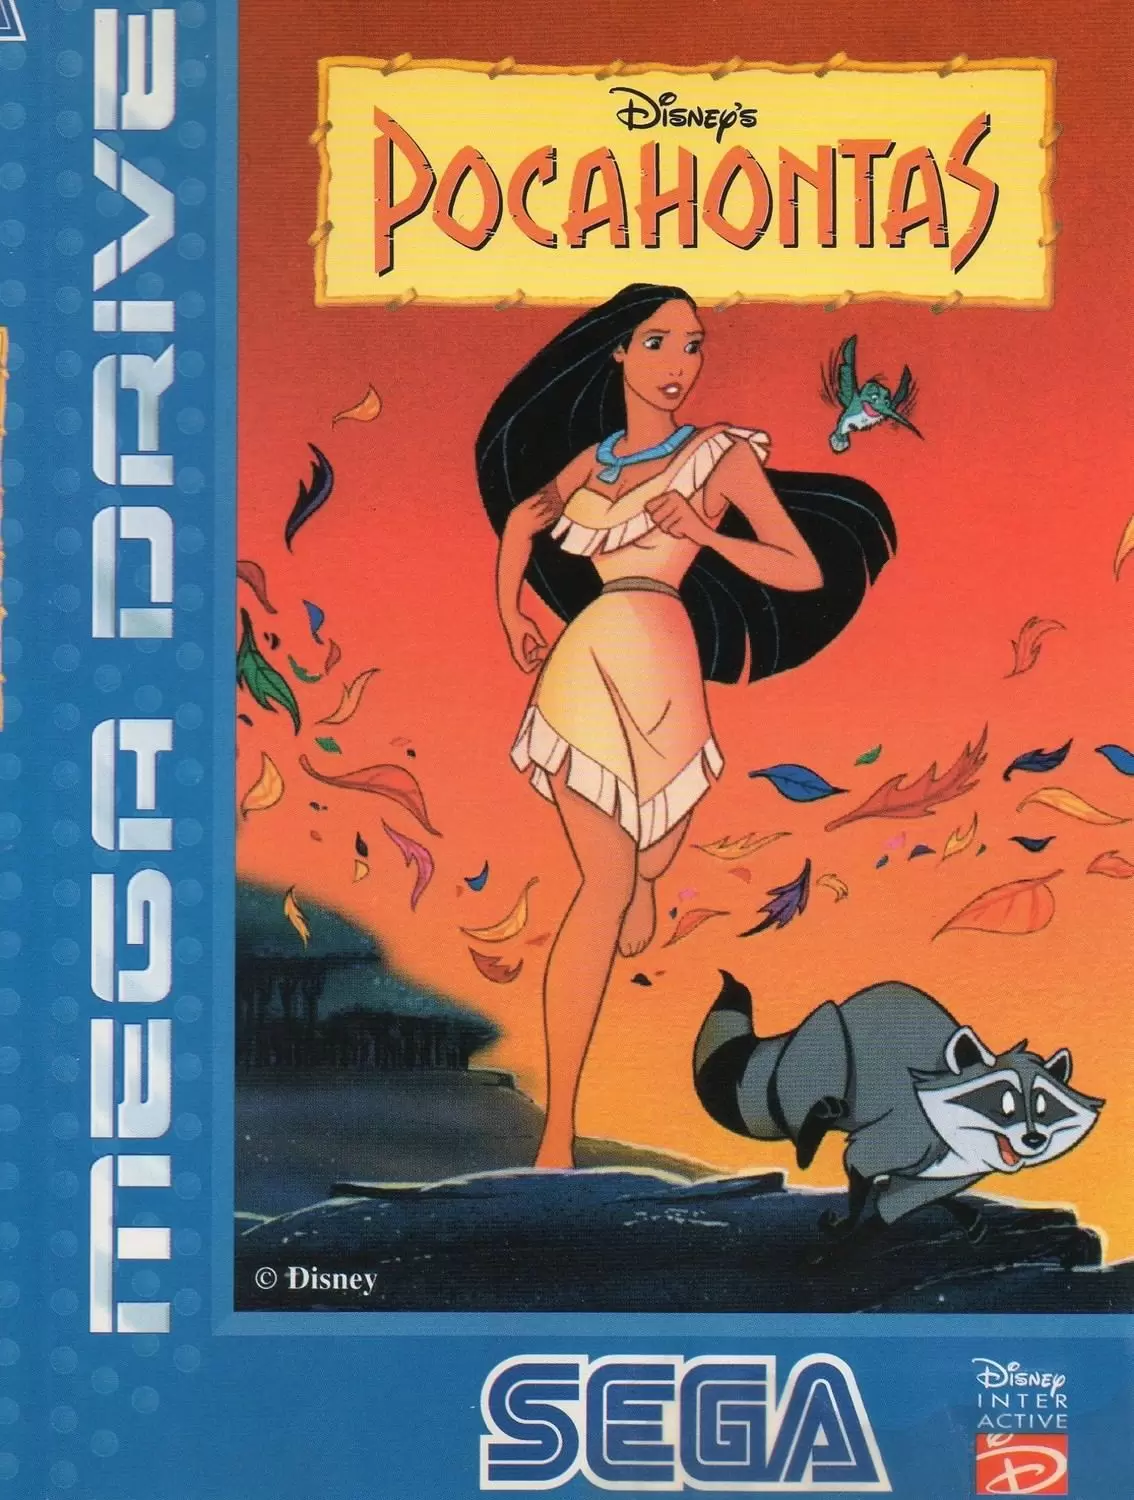 Sega Genesis Games - Pocahontas